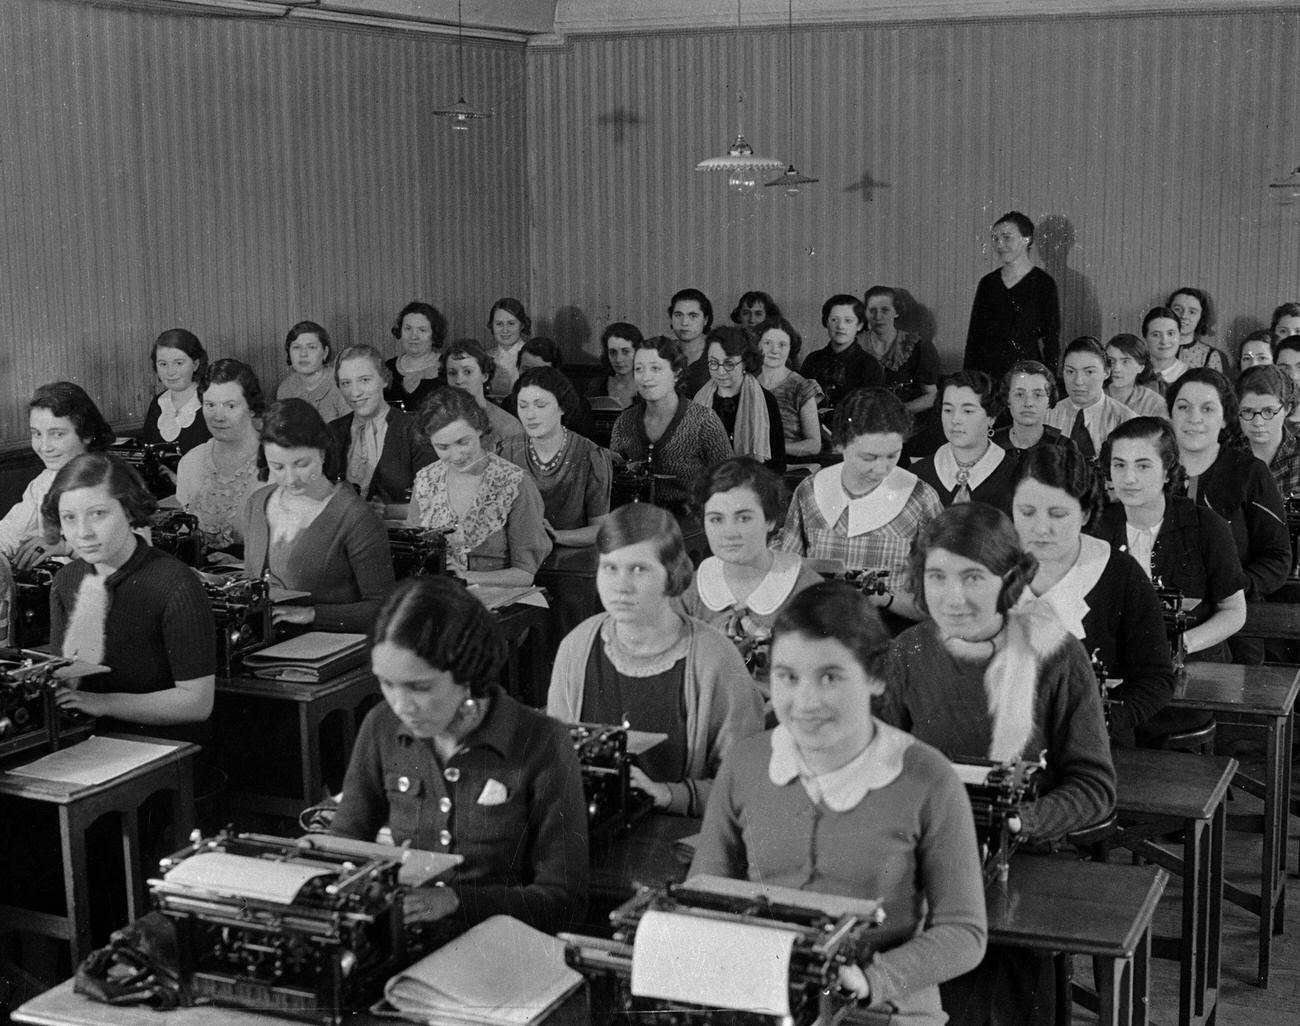 Typewriting class at Pigier school, Paris, circa 1935.